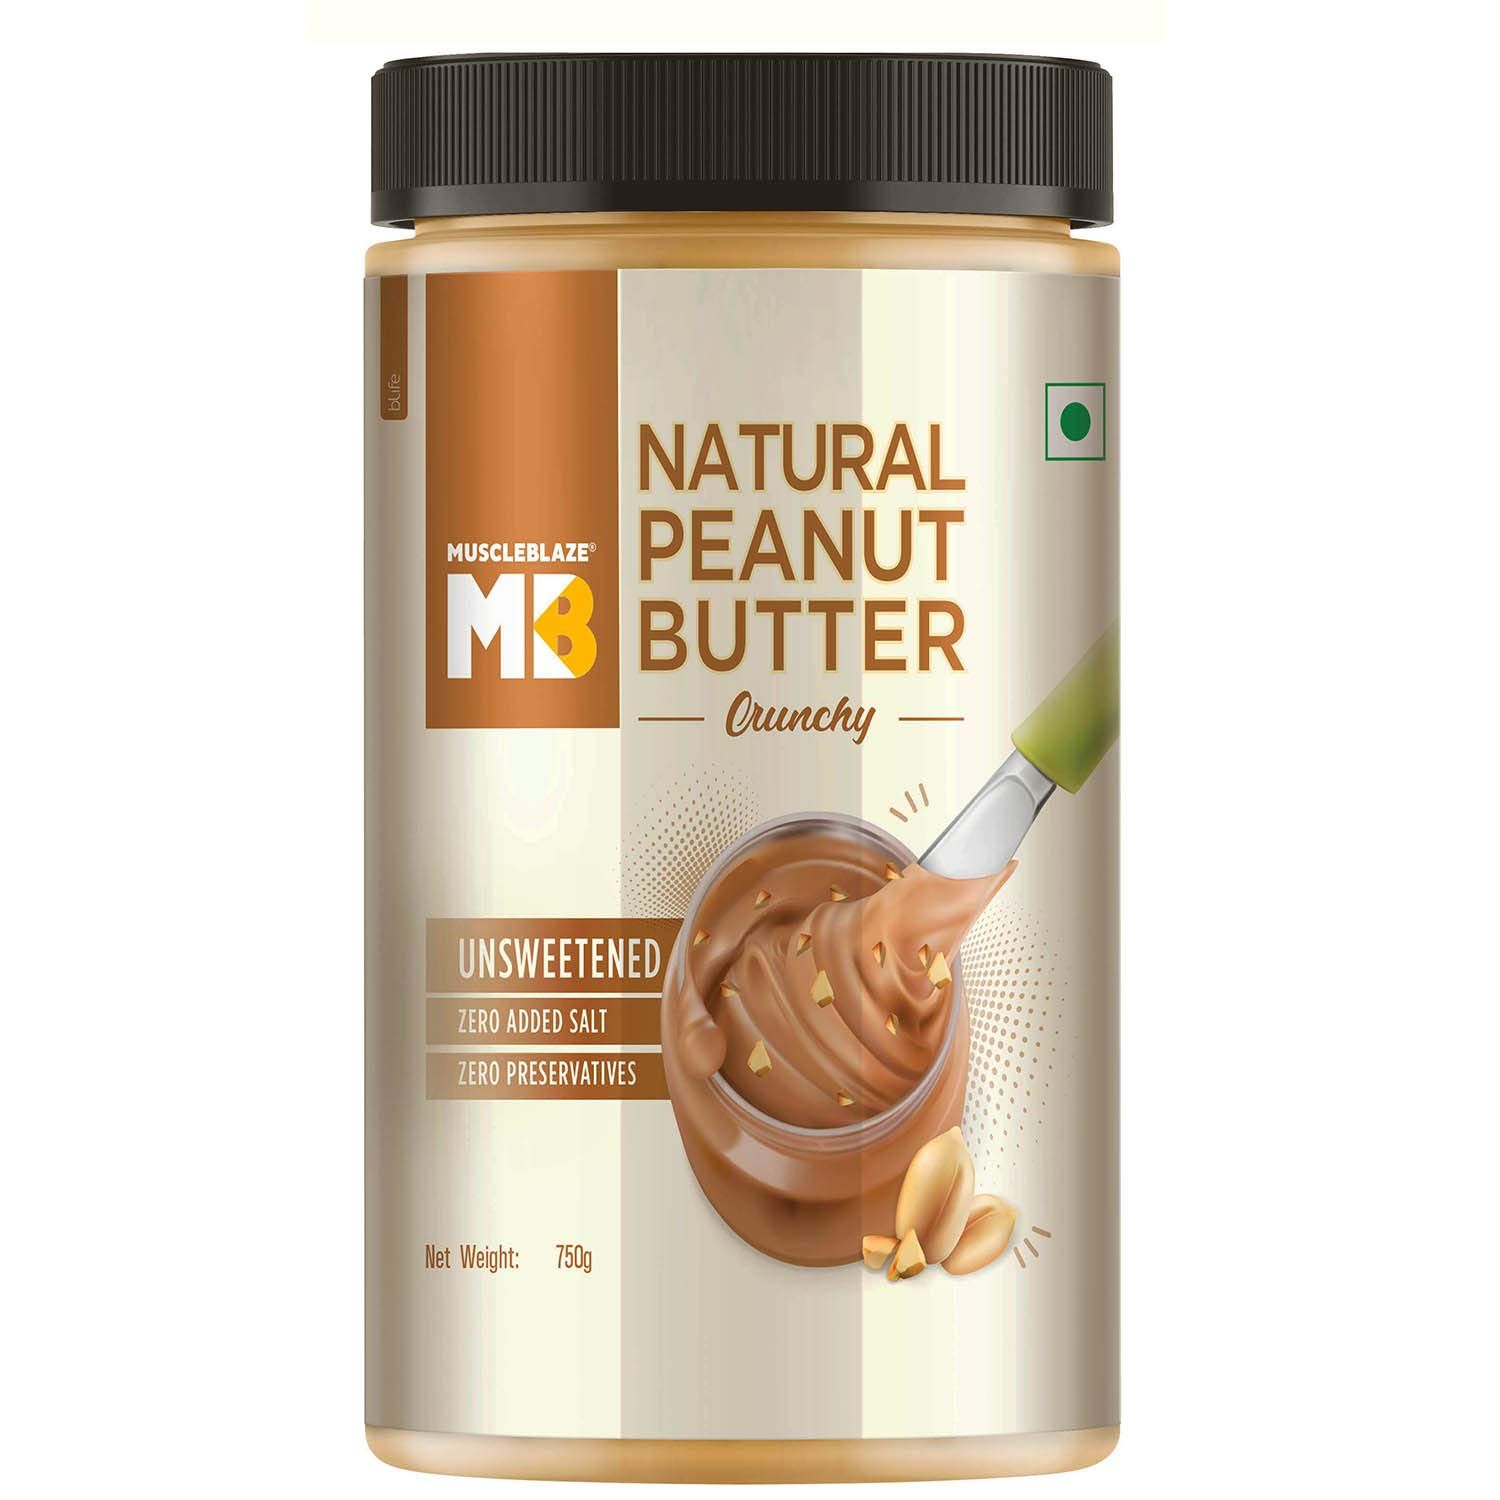 MuscleBlaze Natural Peanut Butter, Crunchy, Unsweetened Image